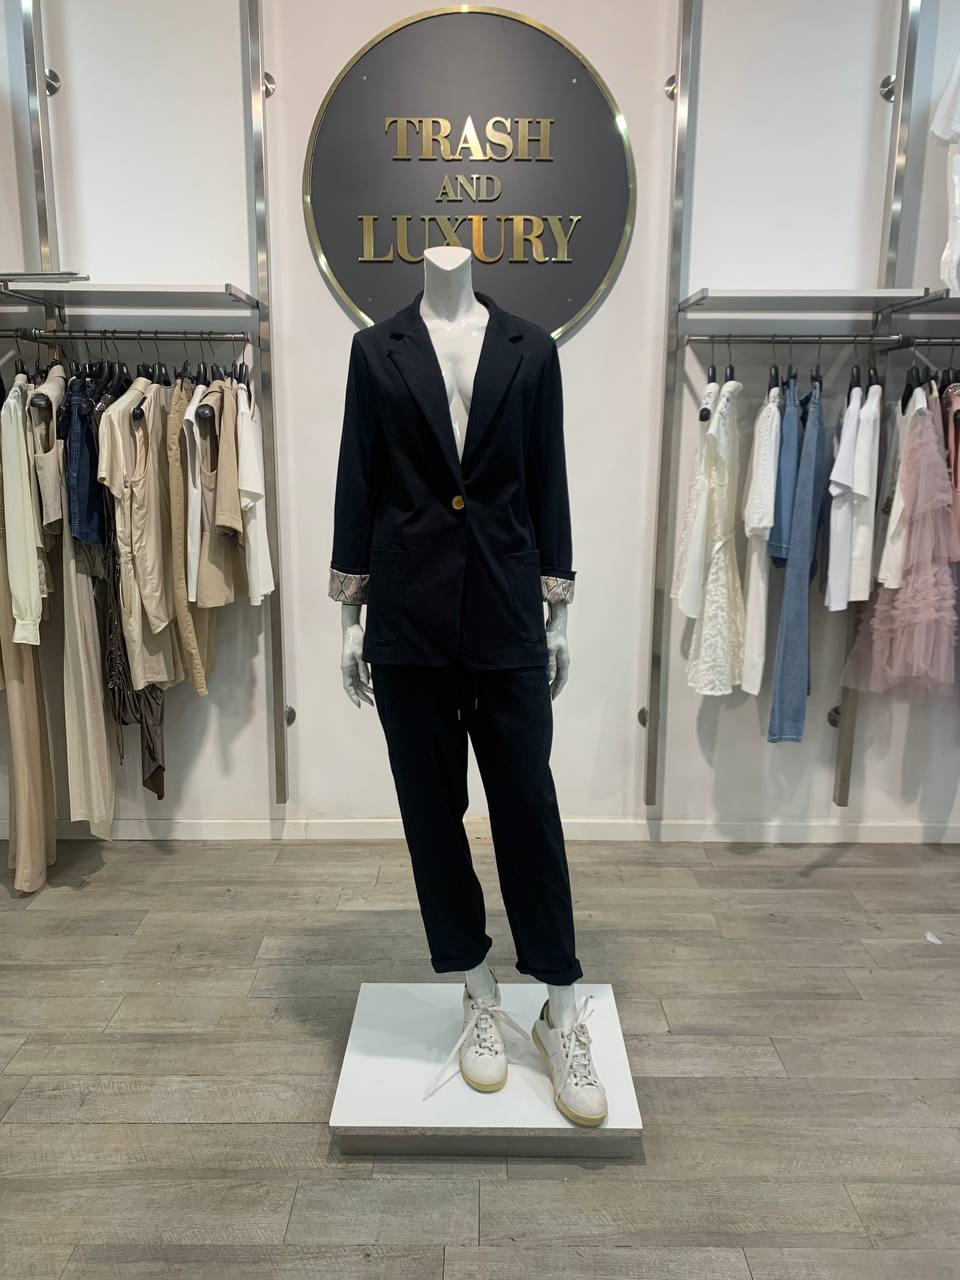 Итальянская одежда, бренд Trash and Luxury, арт. 72829373